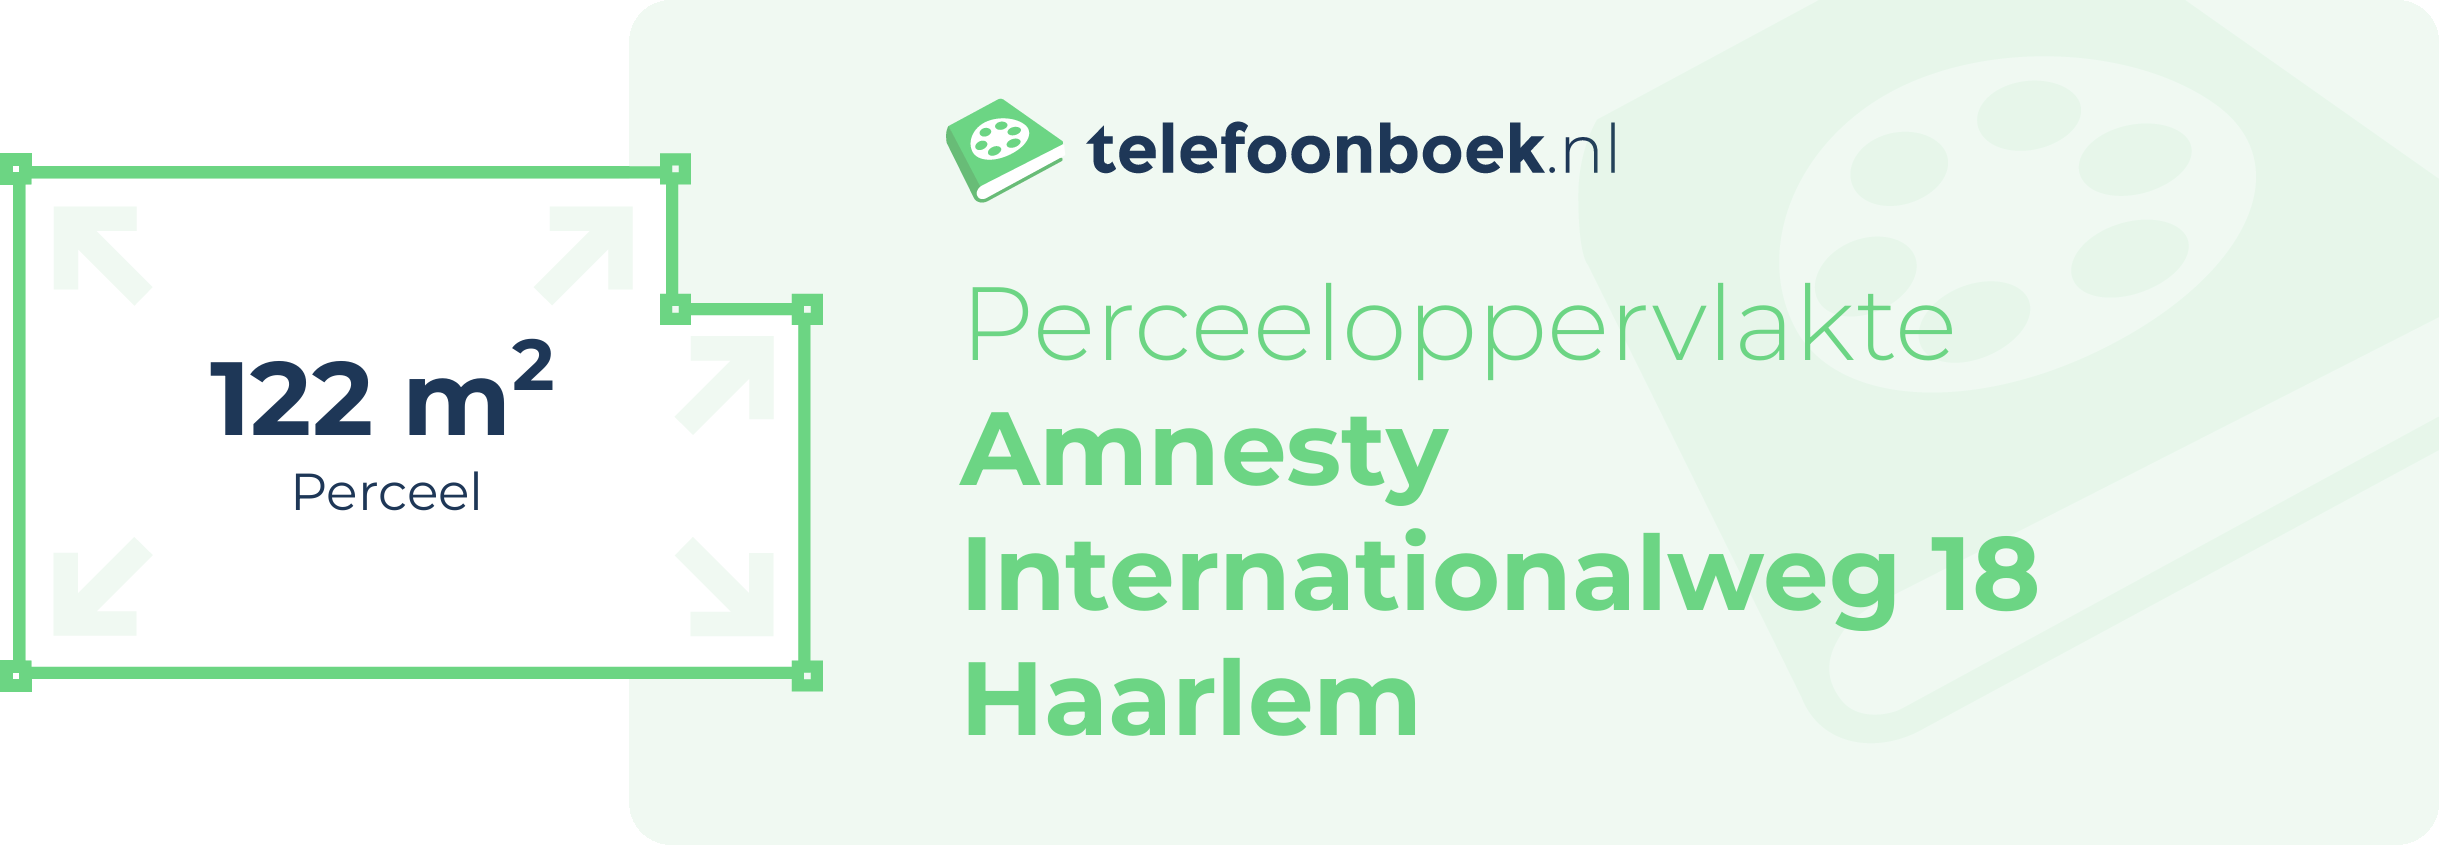 Perceeloppervlakte Amnesty Internationalweg 18 Haarlem